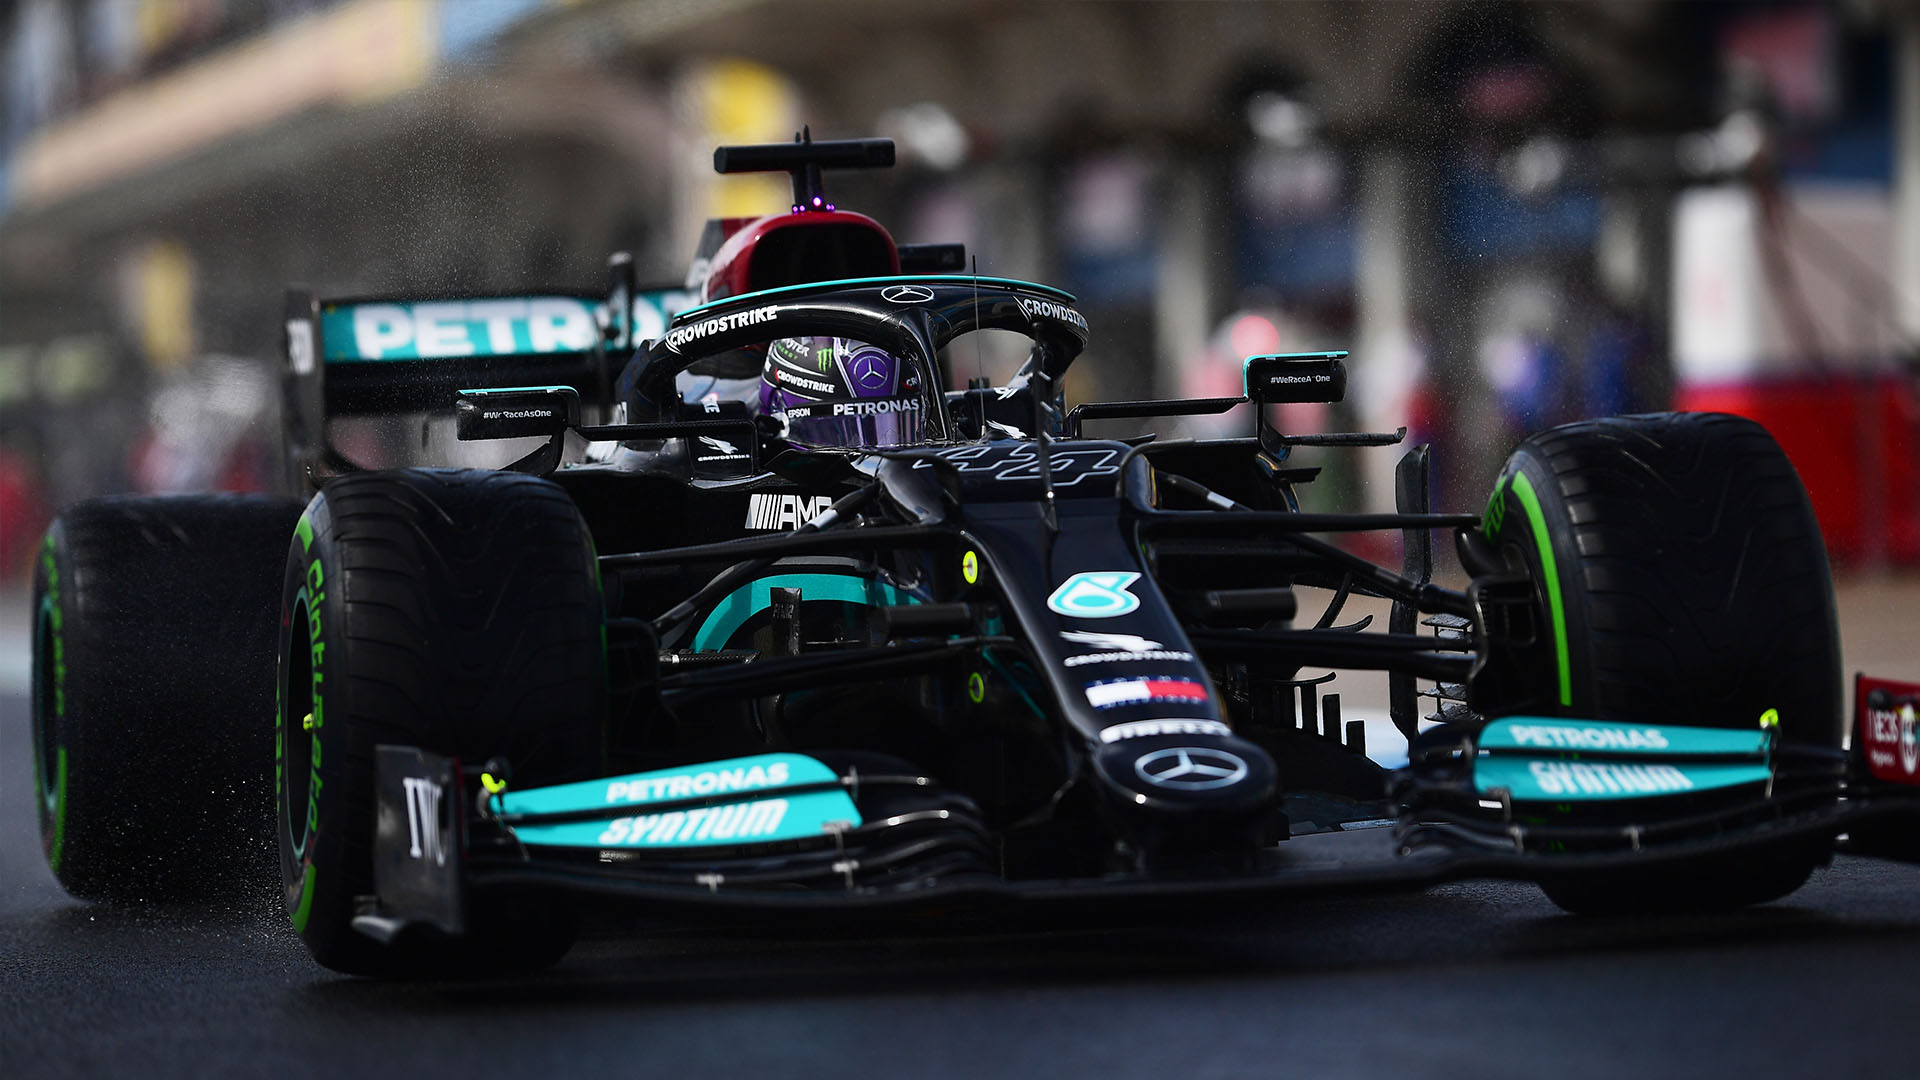 Lewis Hamilton promises 'super attacking' display in 2021 Turkish GP as Valtteri Bottas denies he slowed down to help team mate in qualifying. Formula 1®